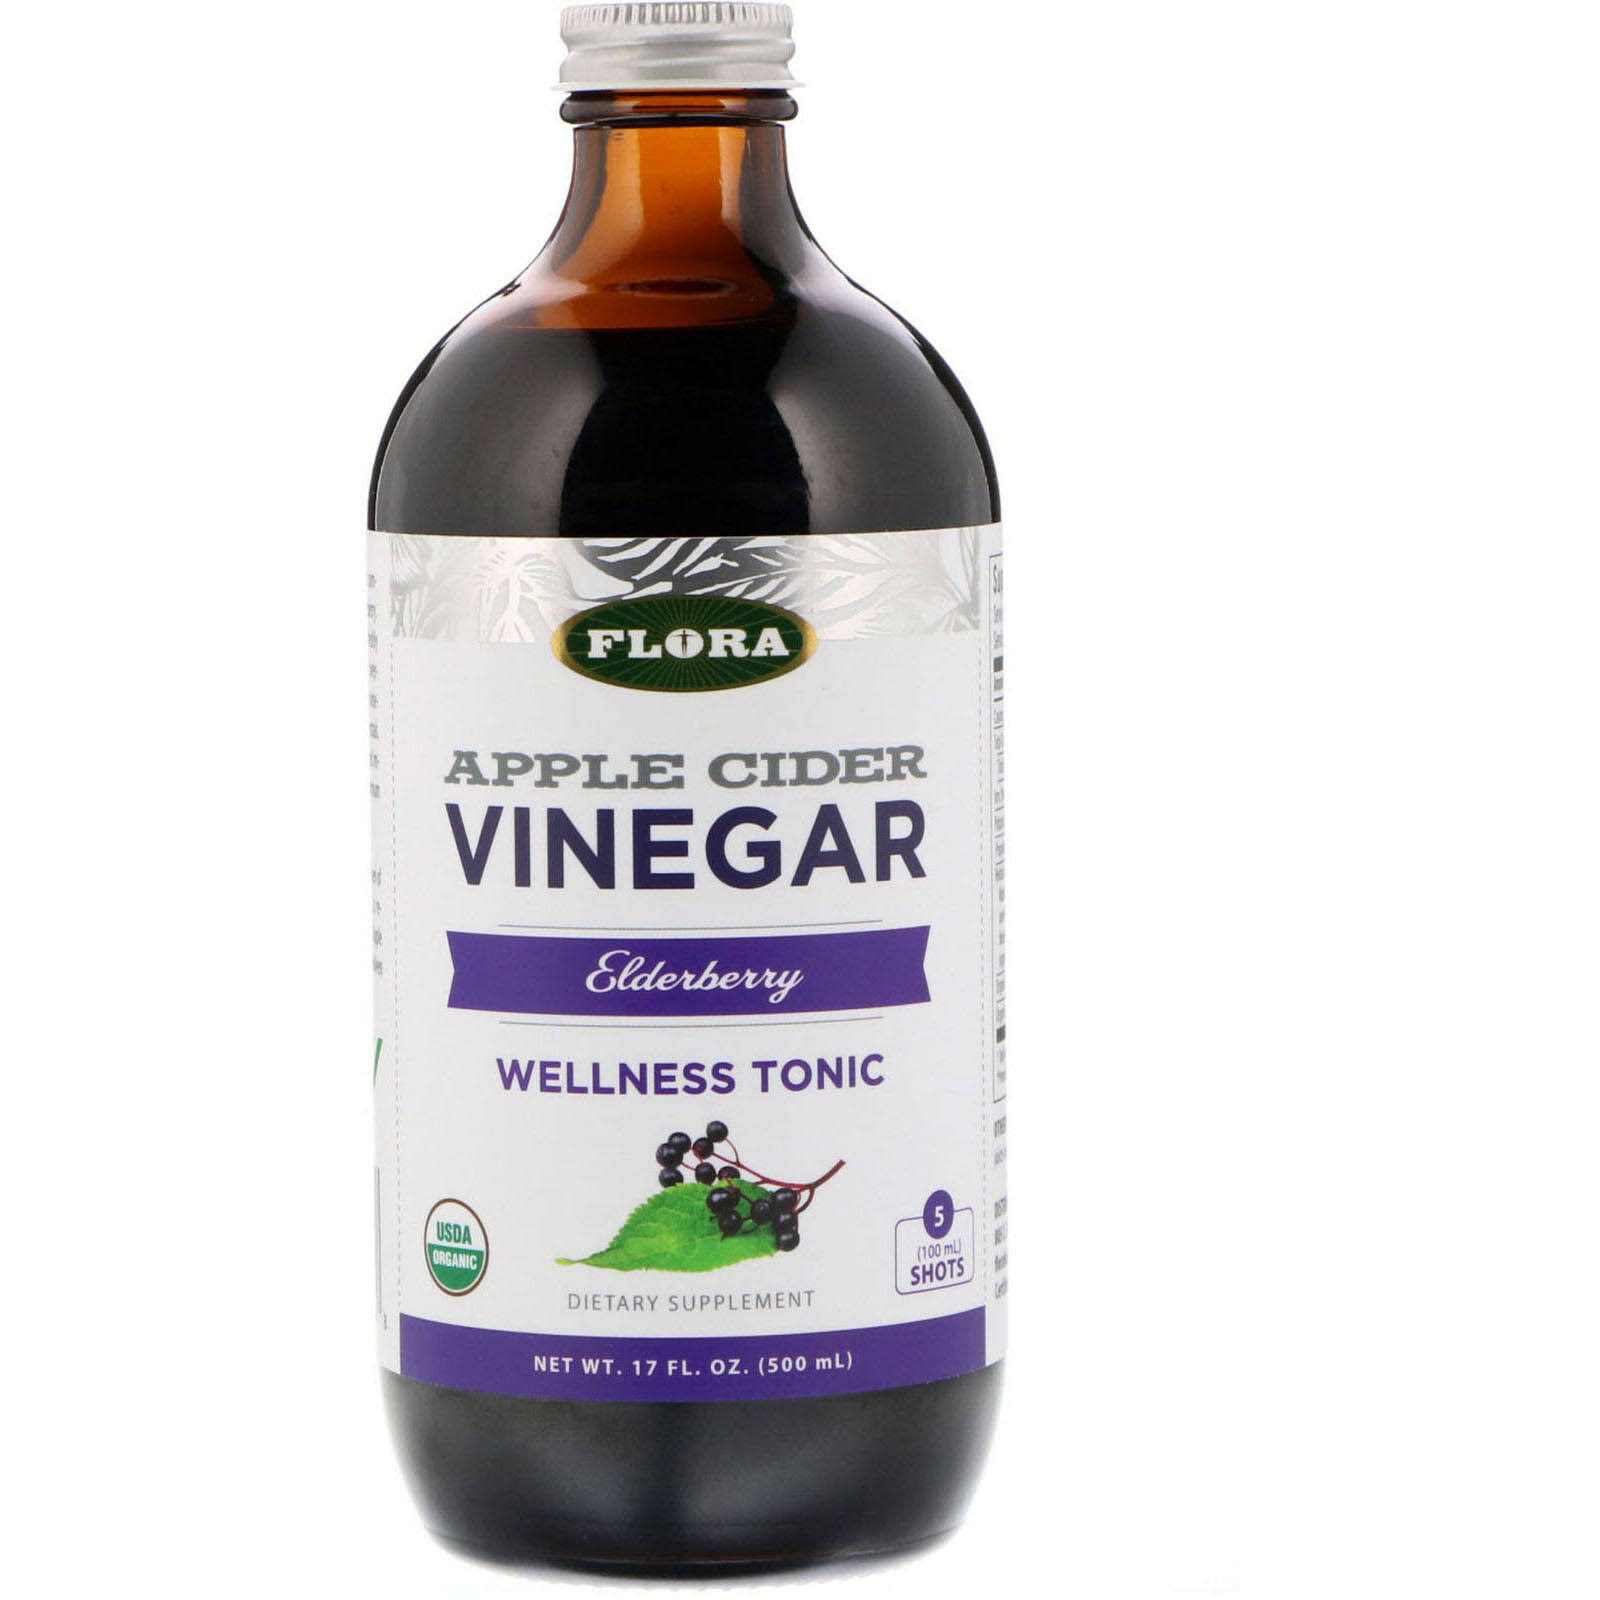 Flora Apple Cider Vinegar - Wellness Tonic Elderberry 17 fl.oz